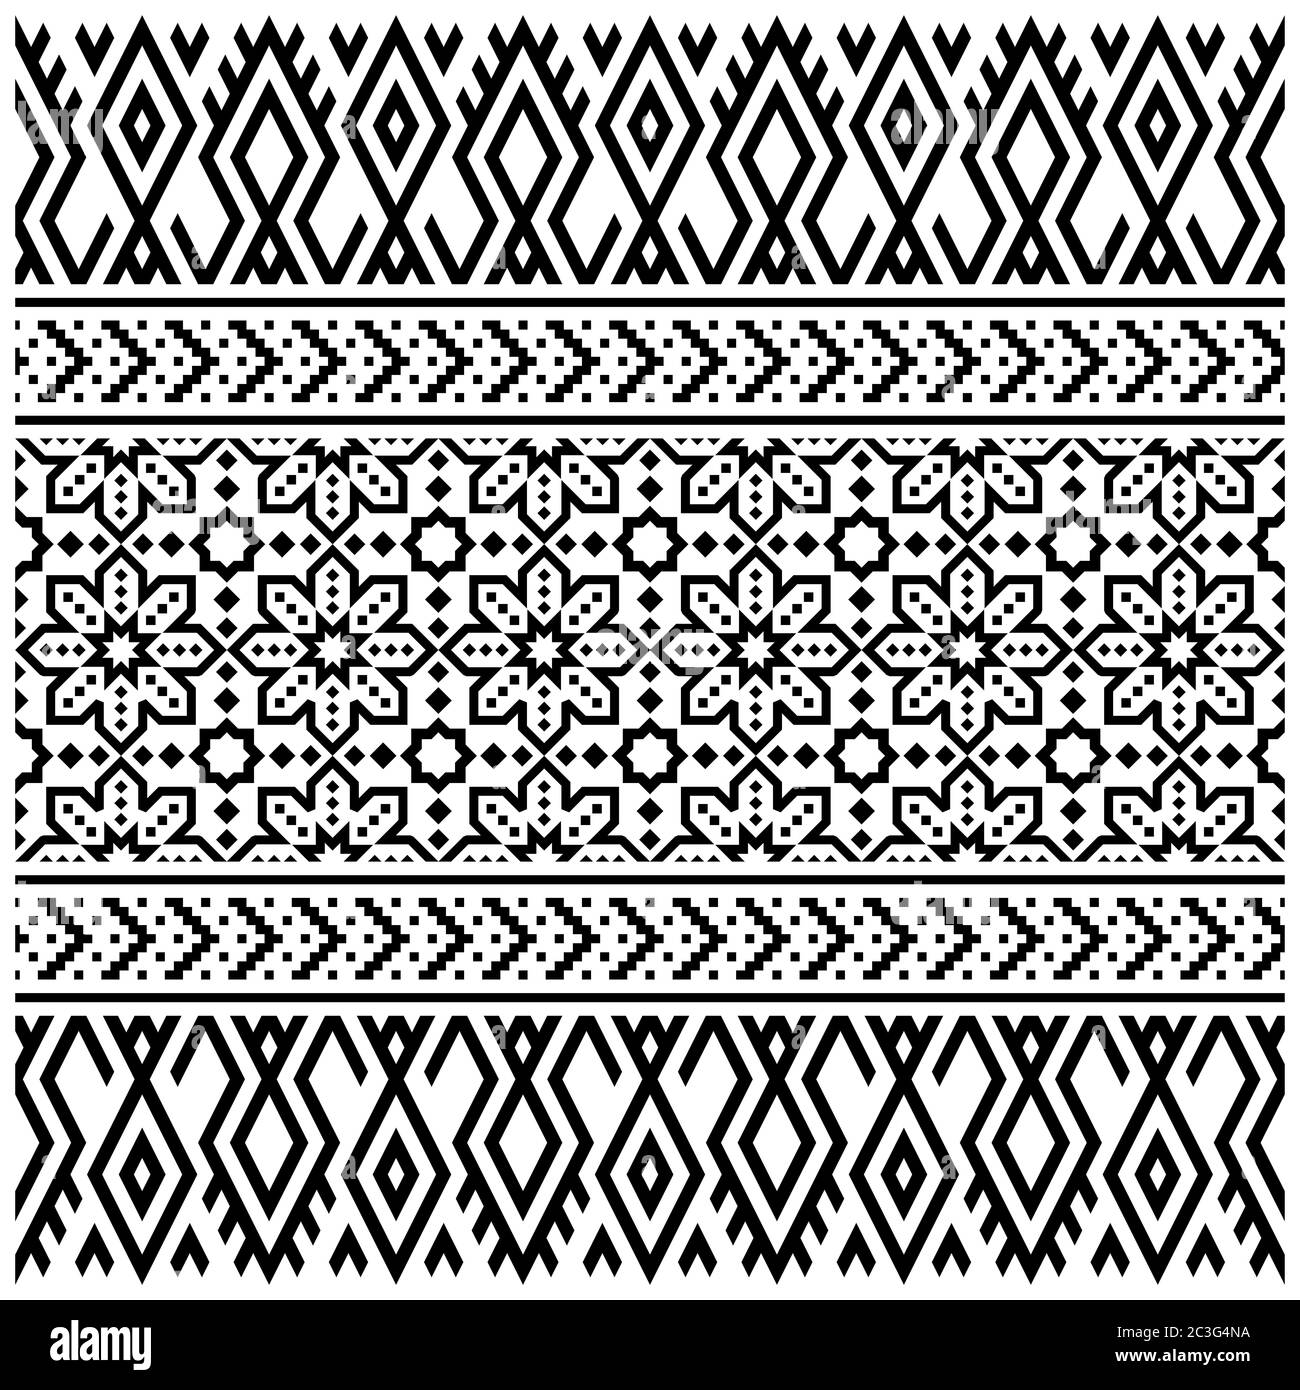 Illustration of Ornament Pattern design in black white color Stock ...